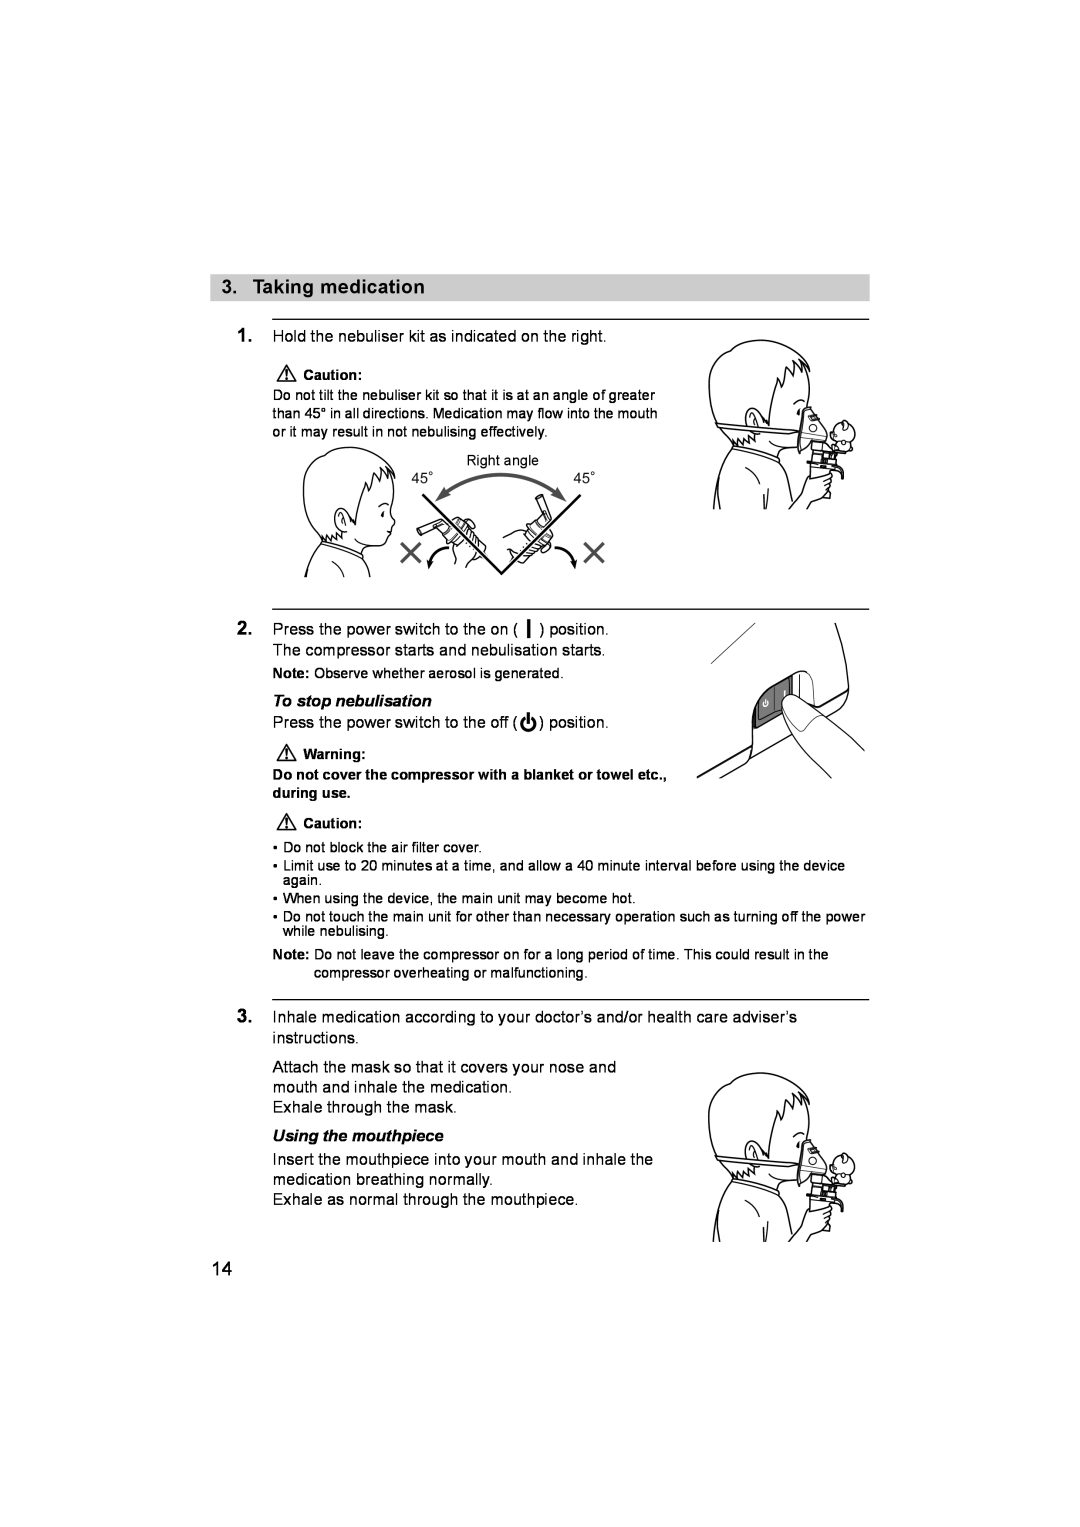 Omron NE- C801KD instruction manual Taking medication, To stop nebulisation, Using the mouthpiece 